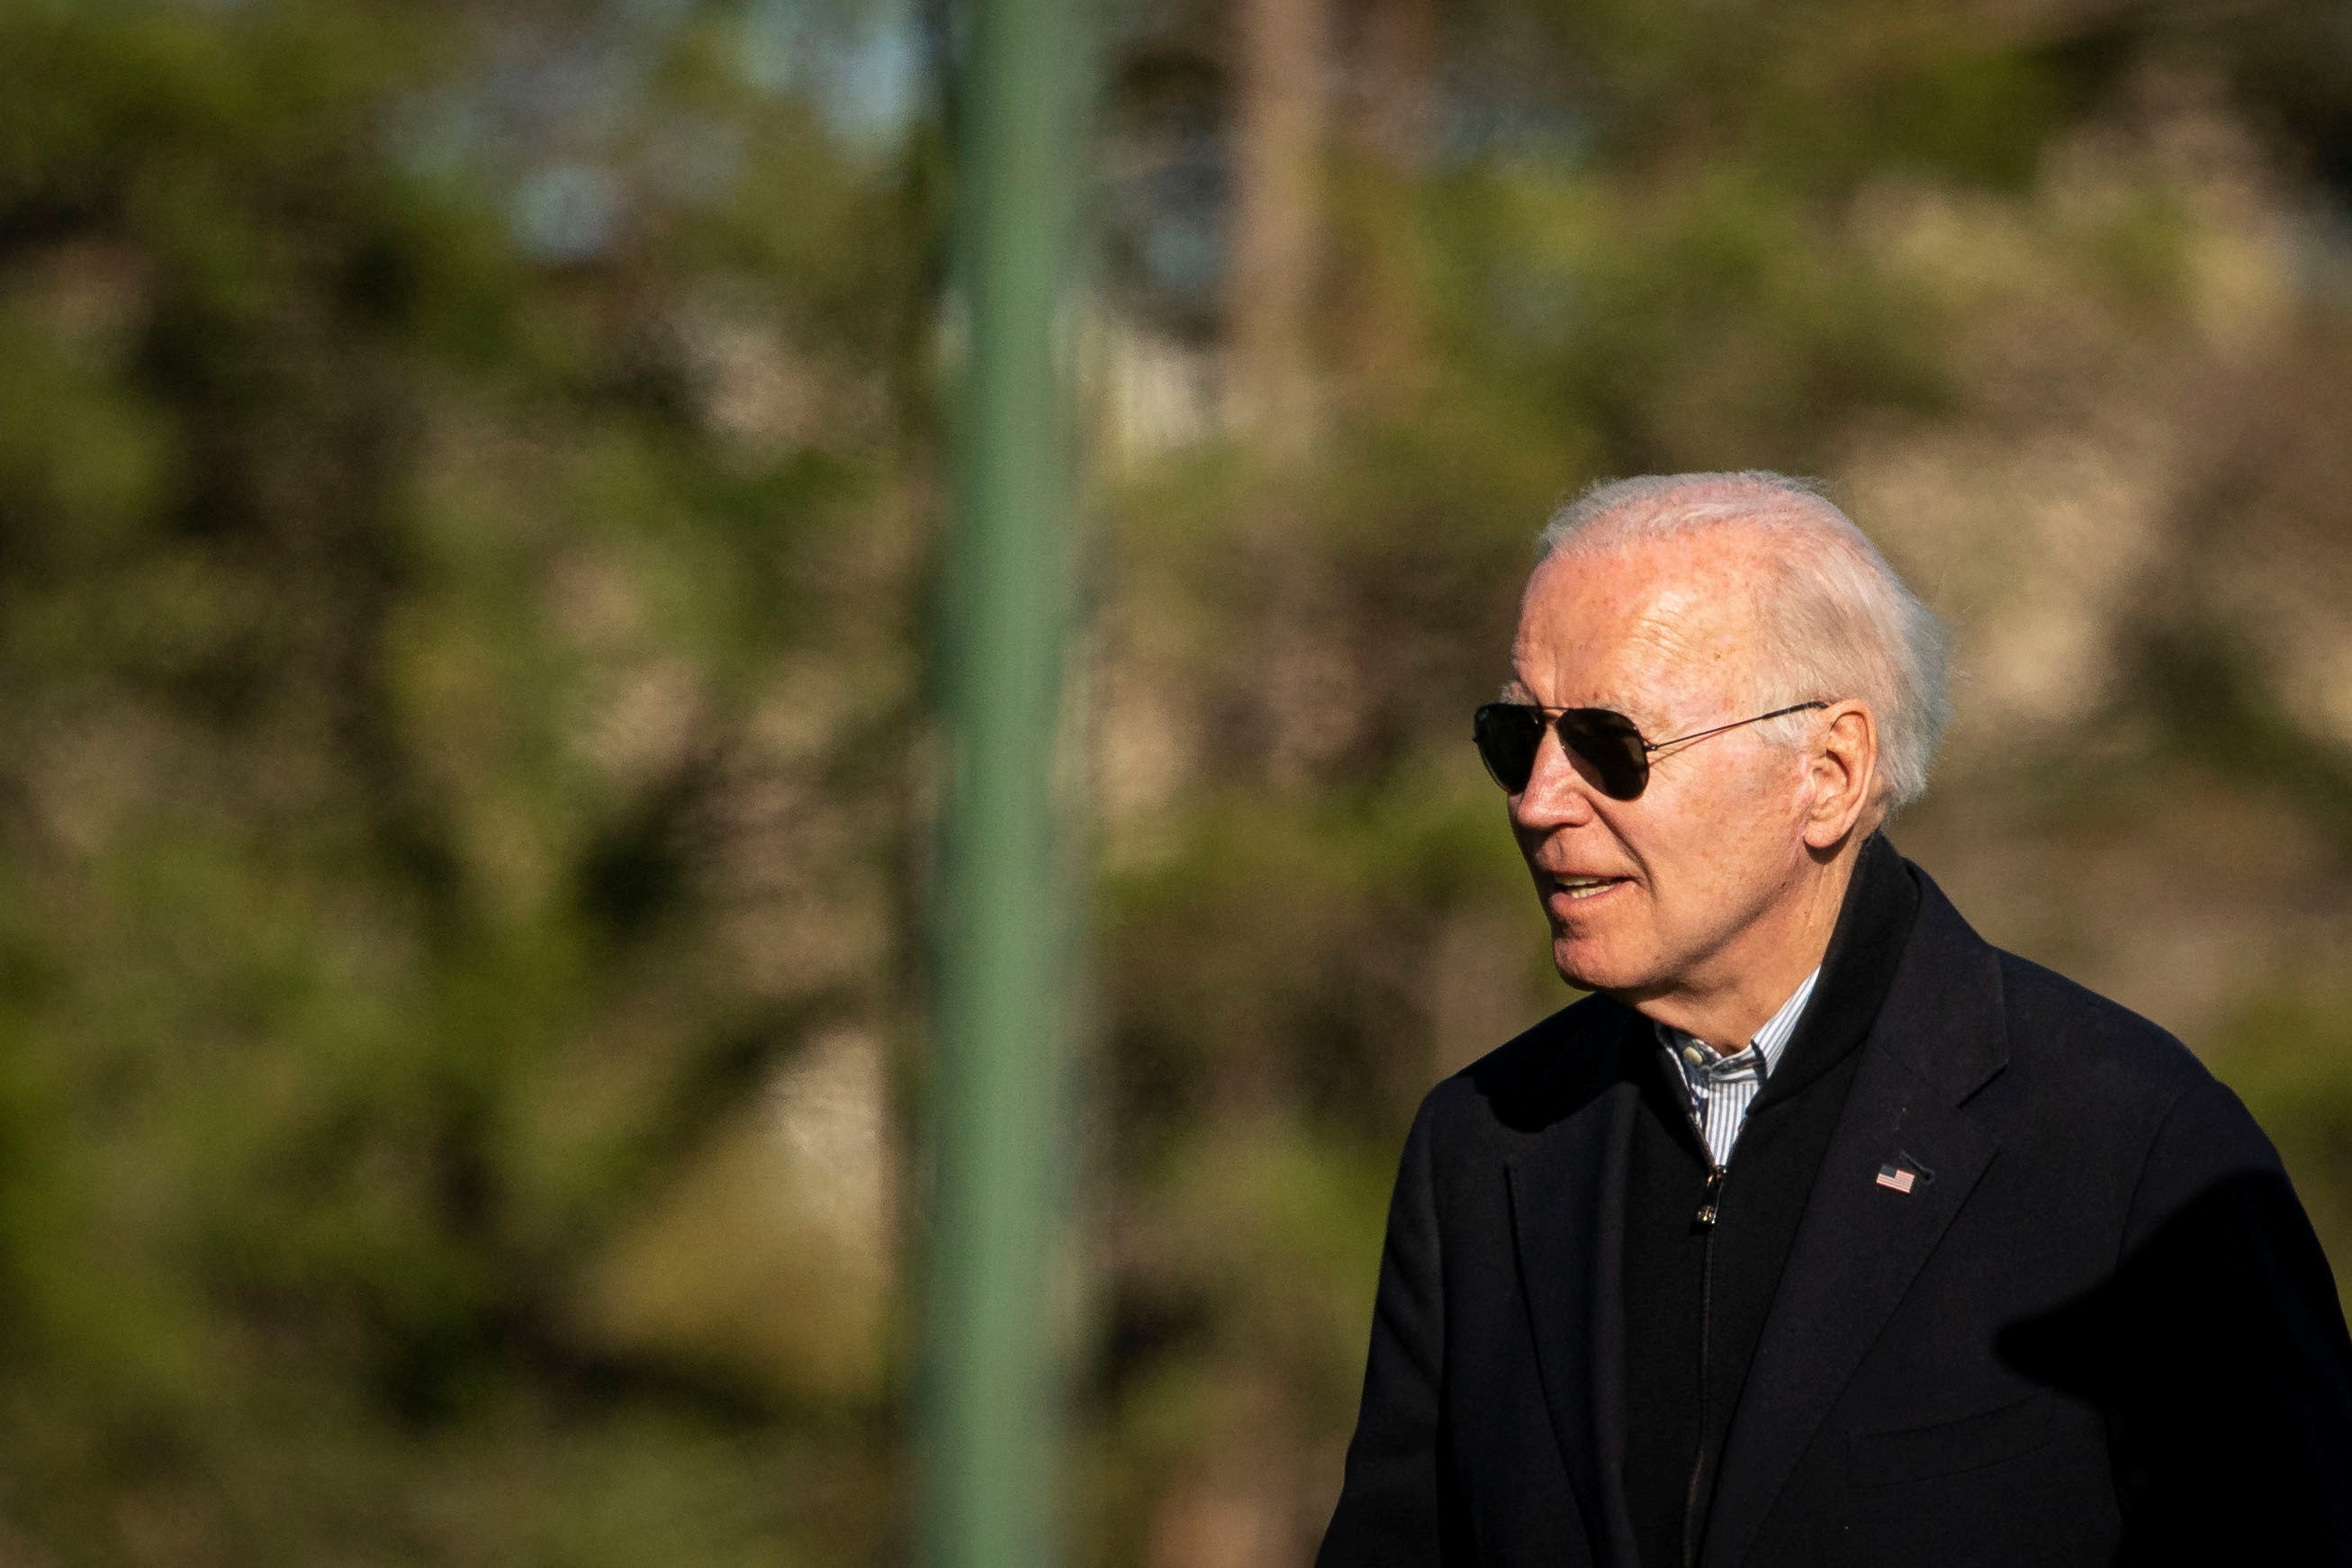 U.S. President Joe Biden walks towards his motorcade at Fort Lesley J. McNair, following spending the weekend at Camp David